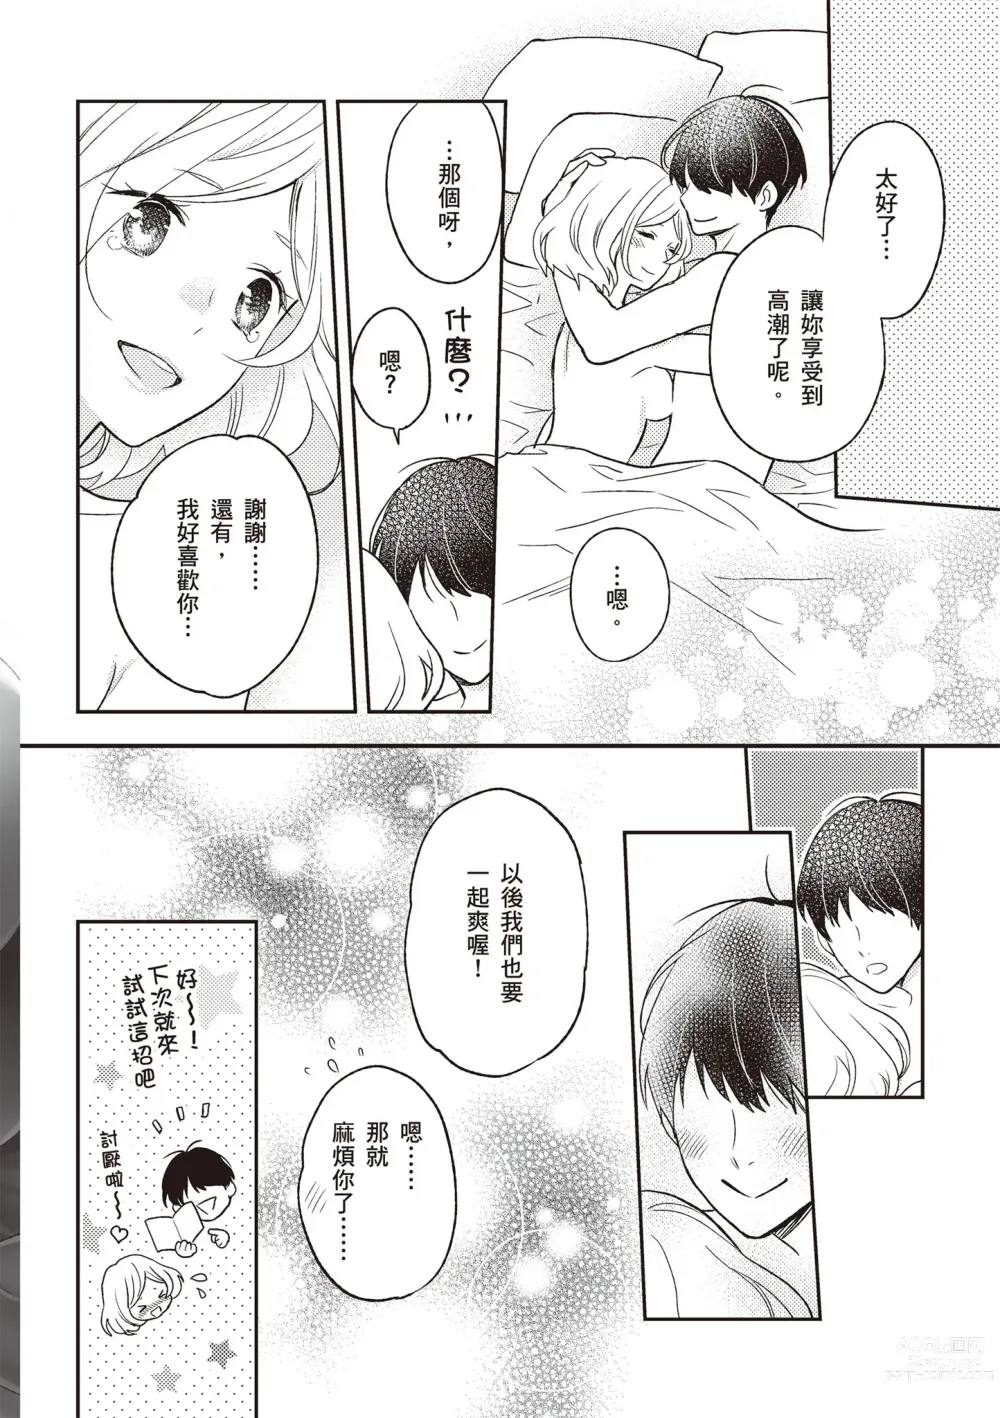 Page 9 of manga 內部攻略！圖解陰道快感開發･高潮完全指南